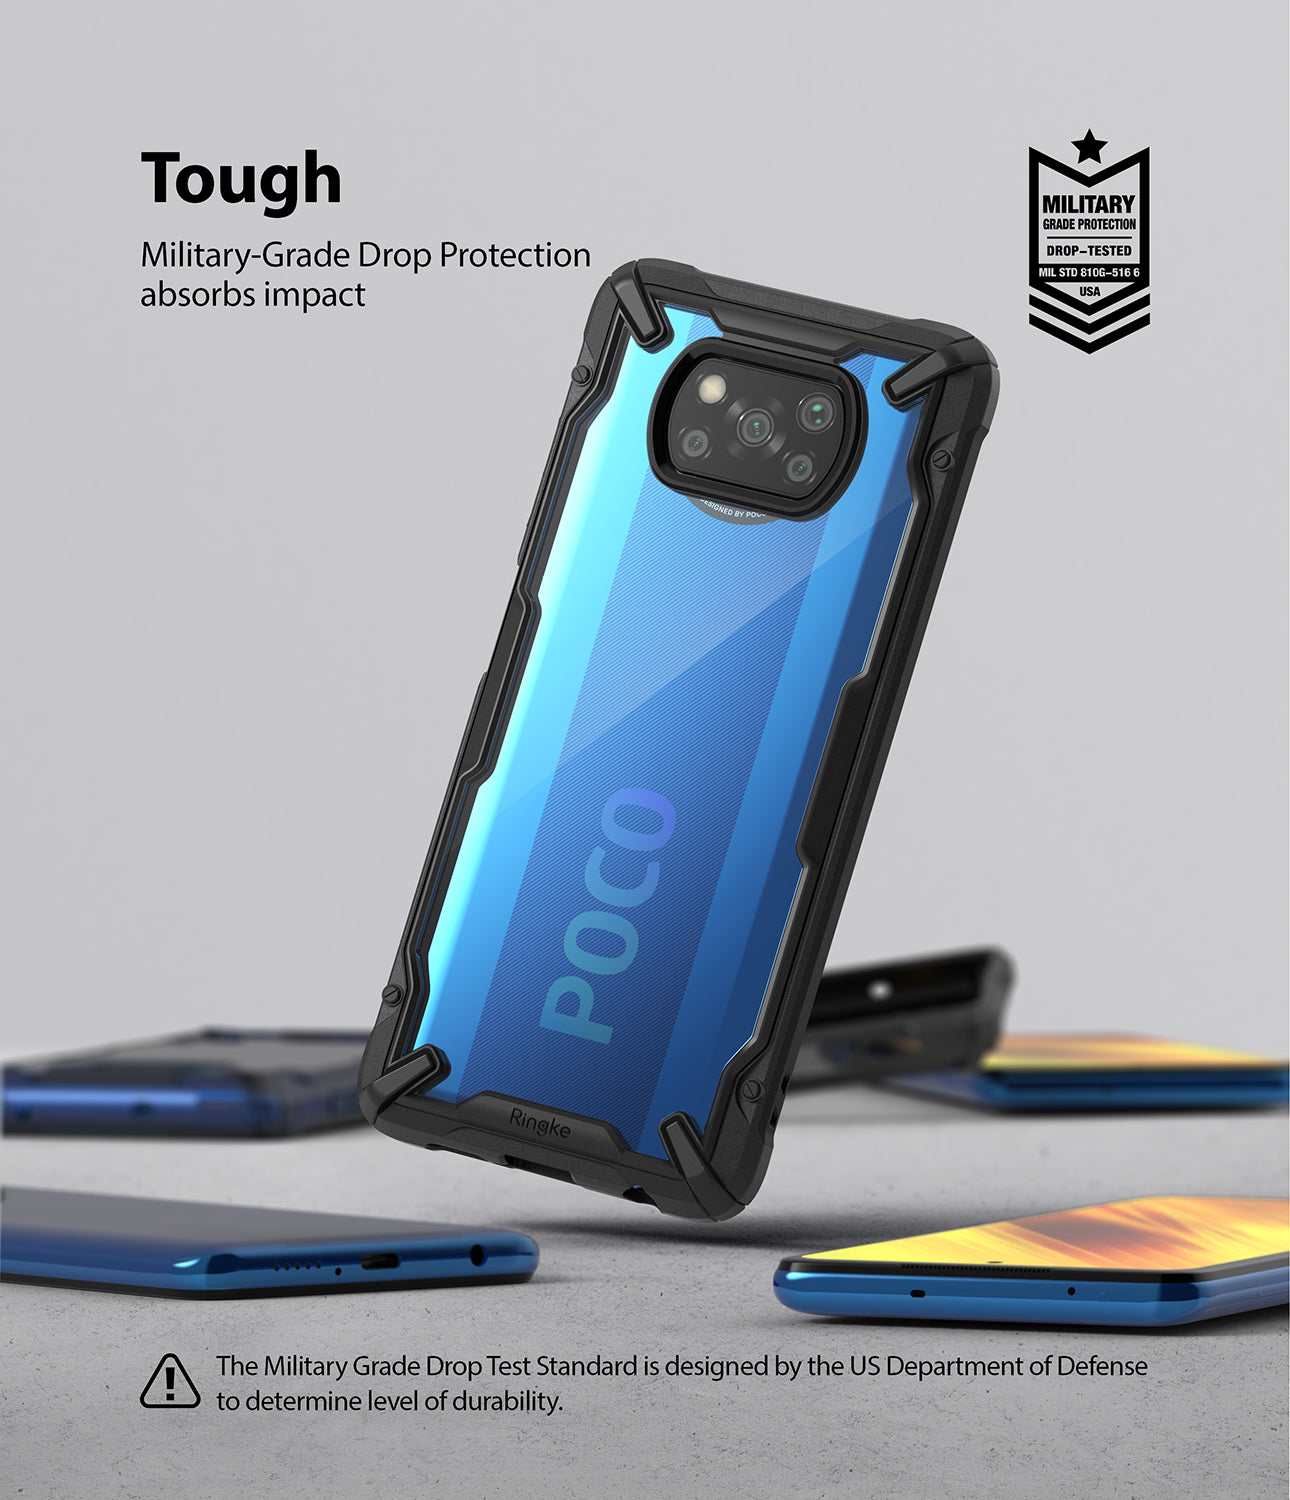 Poco X3 NFC Case | Fusion-X